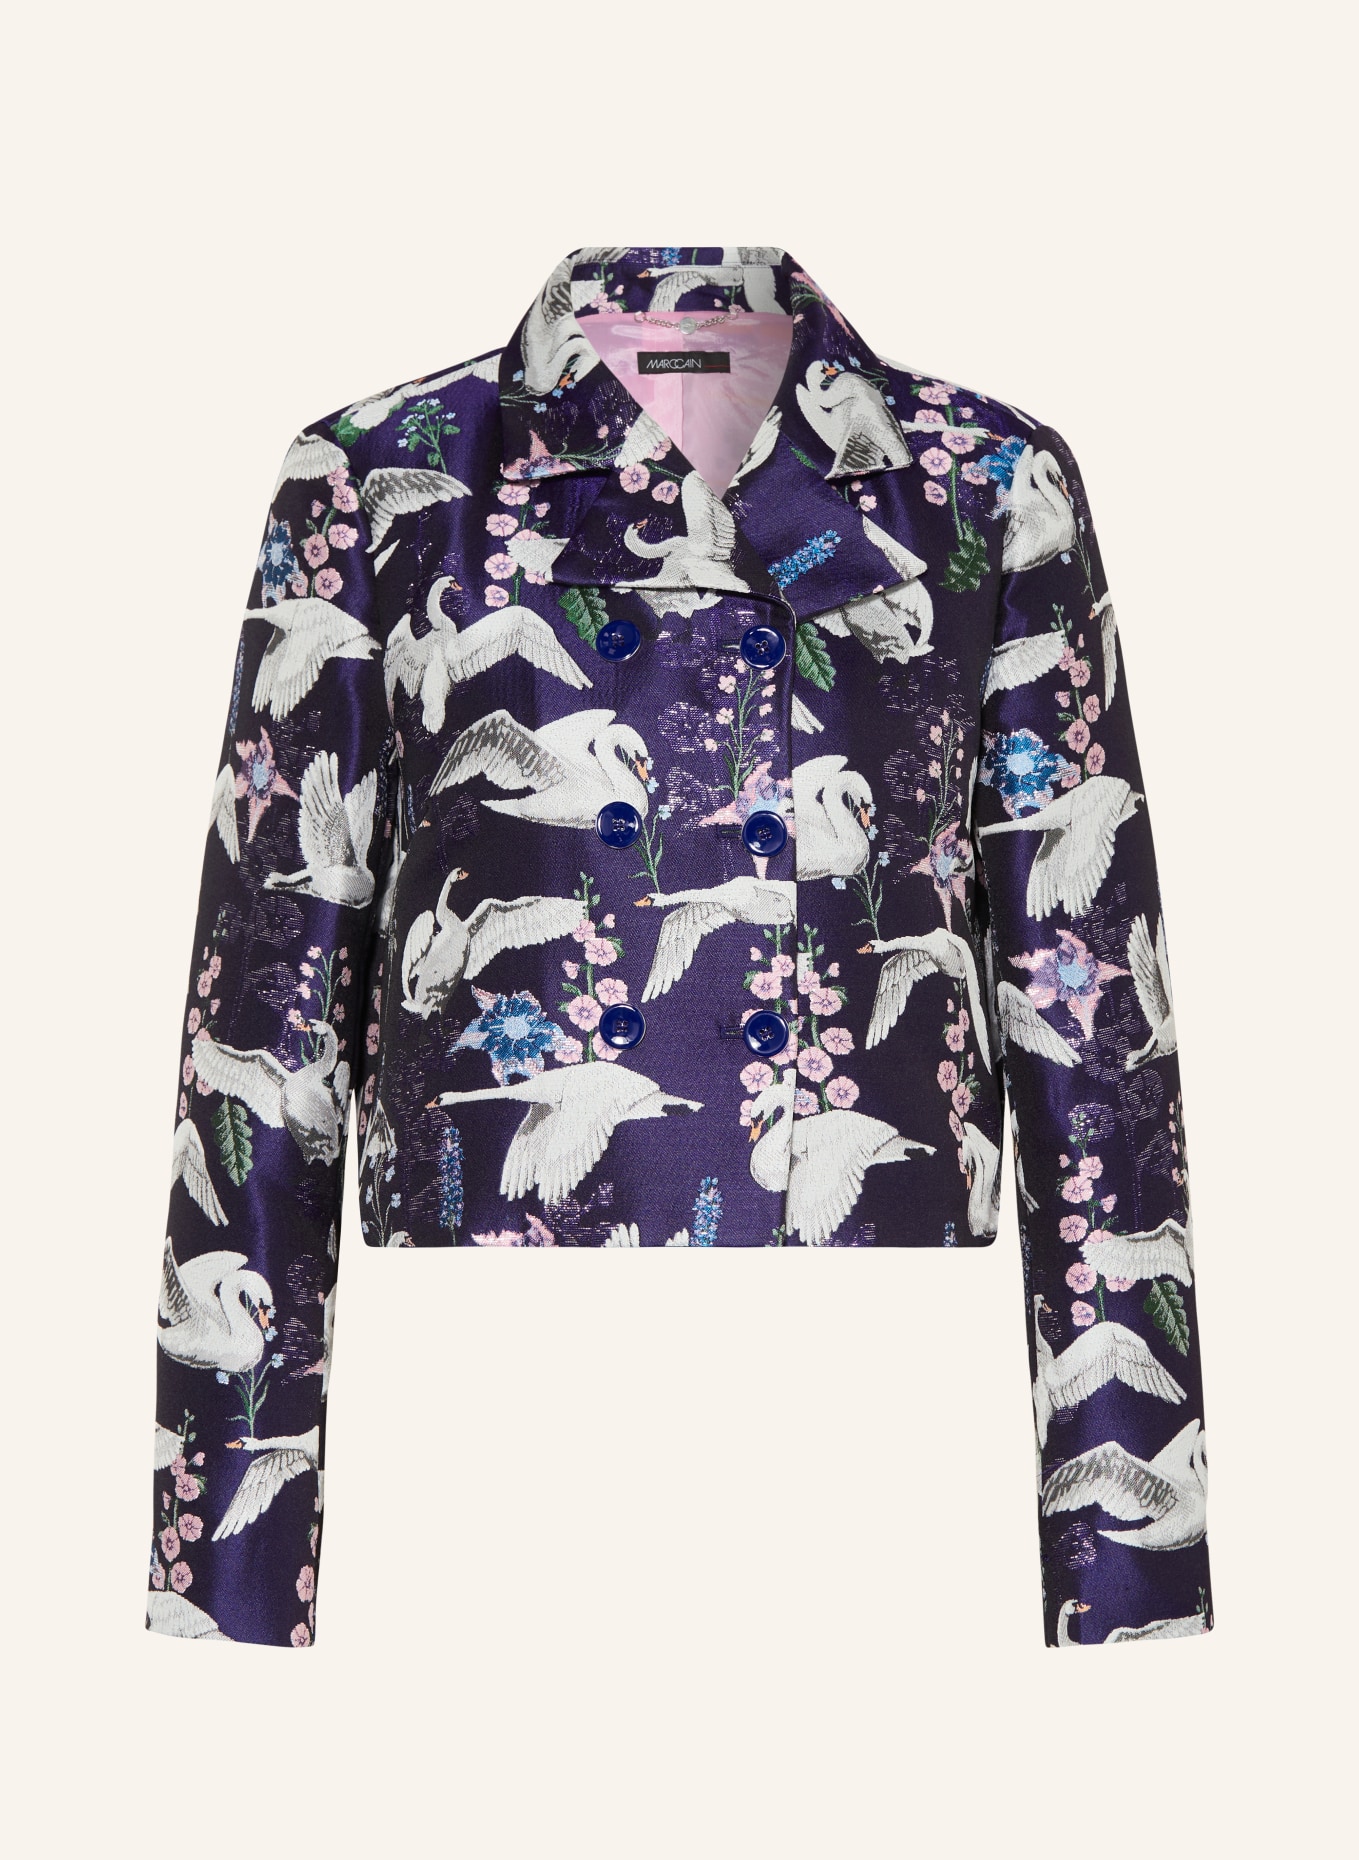 MARC CAIN Jacquard-Blazer mit Glitzergarn, Farbe: 755 deep violet (Bild 1)